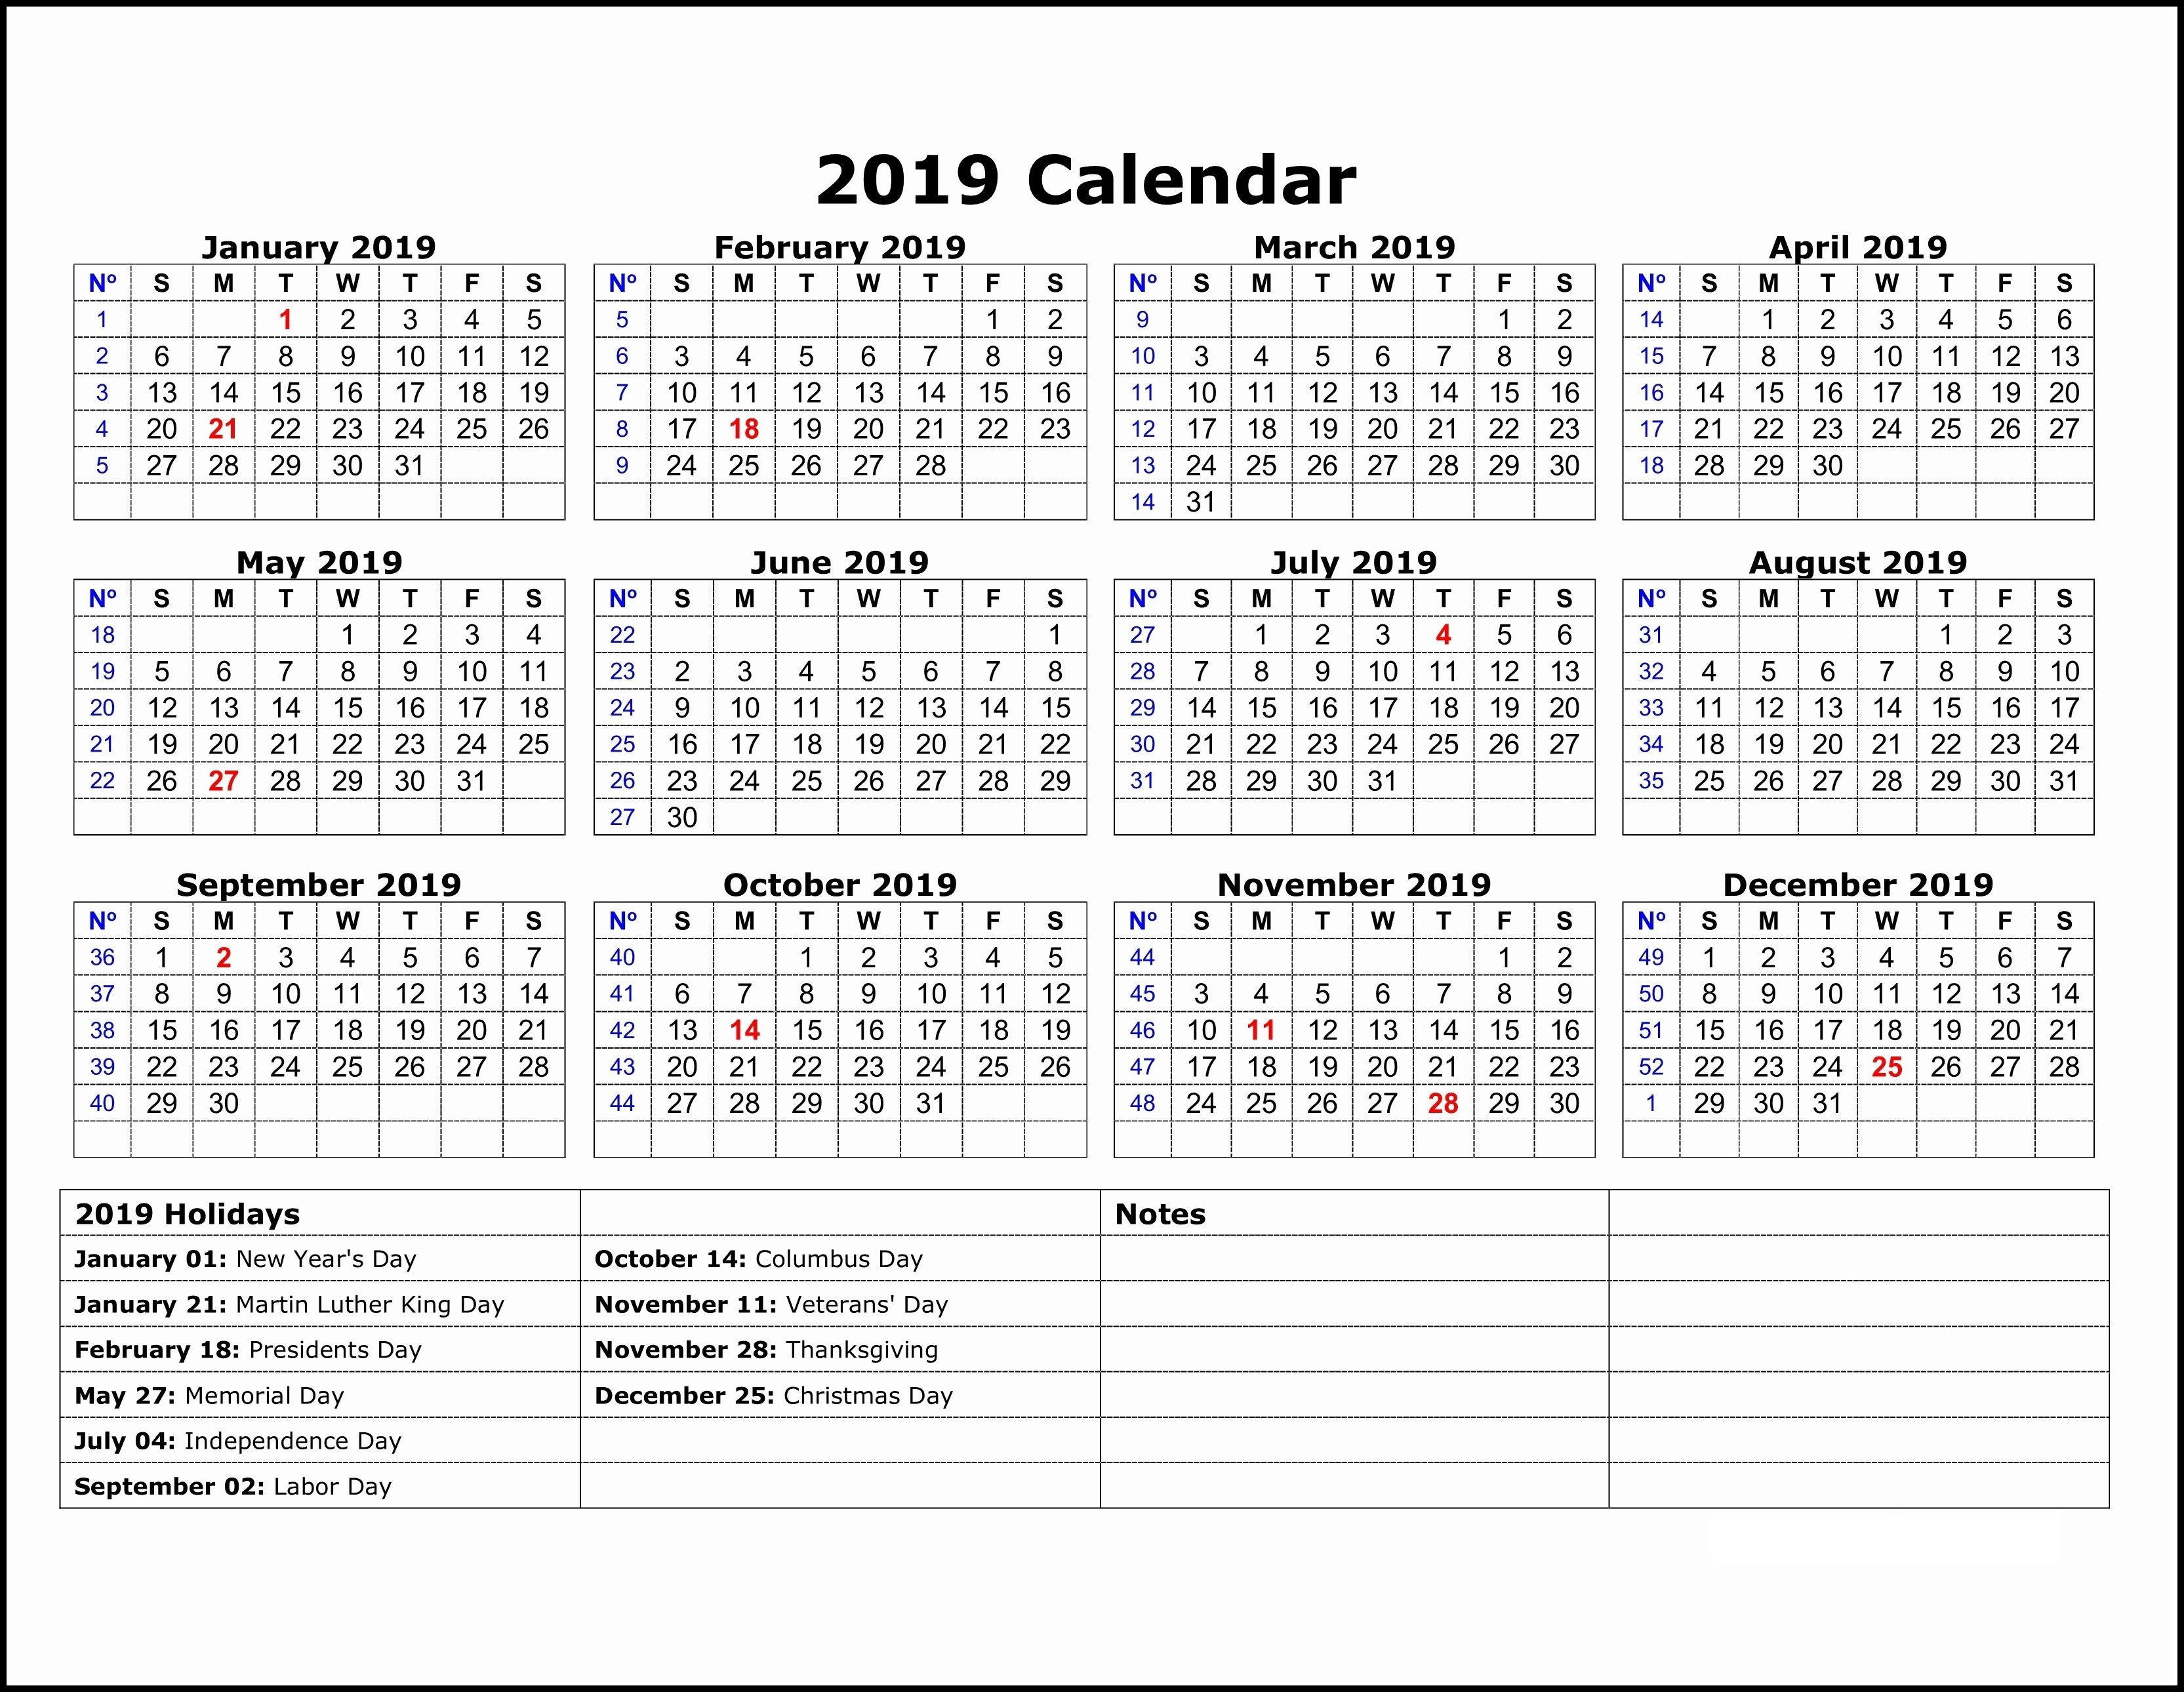 2019 Calendar Template One Note | Calendar 2019 Template